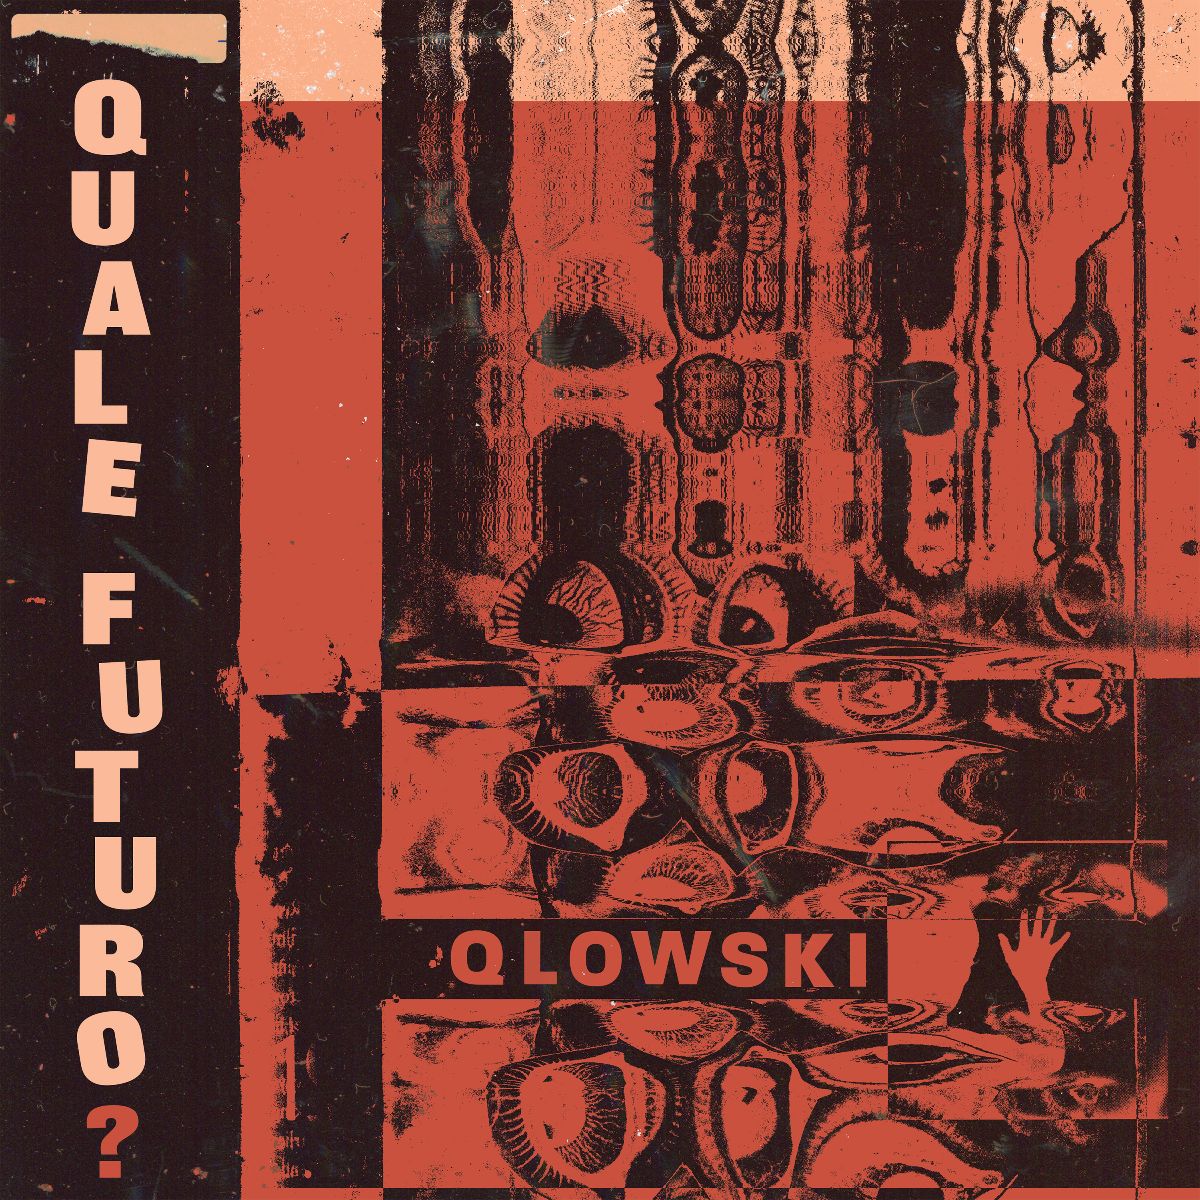 Qlowski "Quale Futuro?" LP